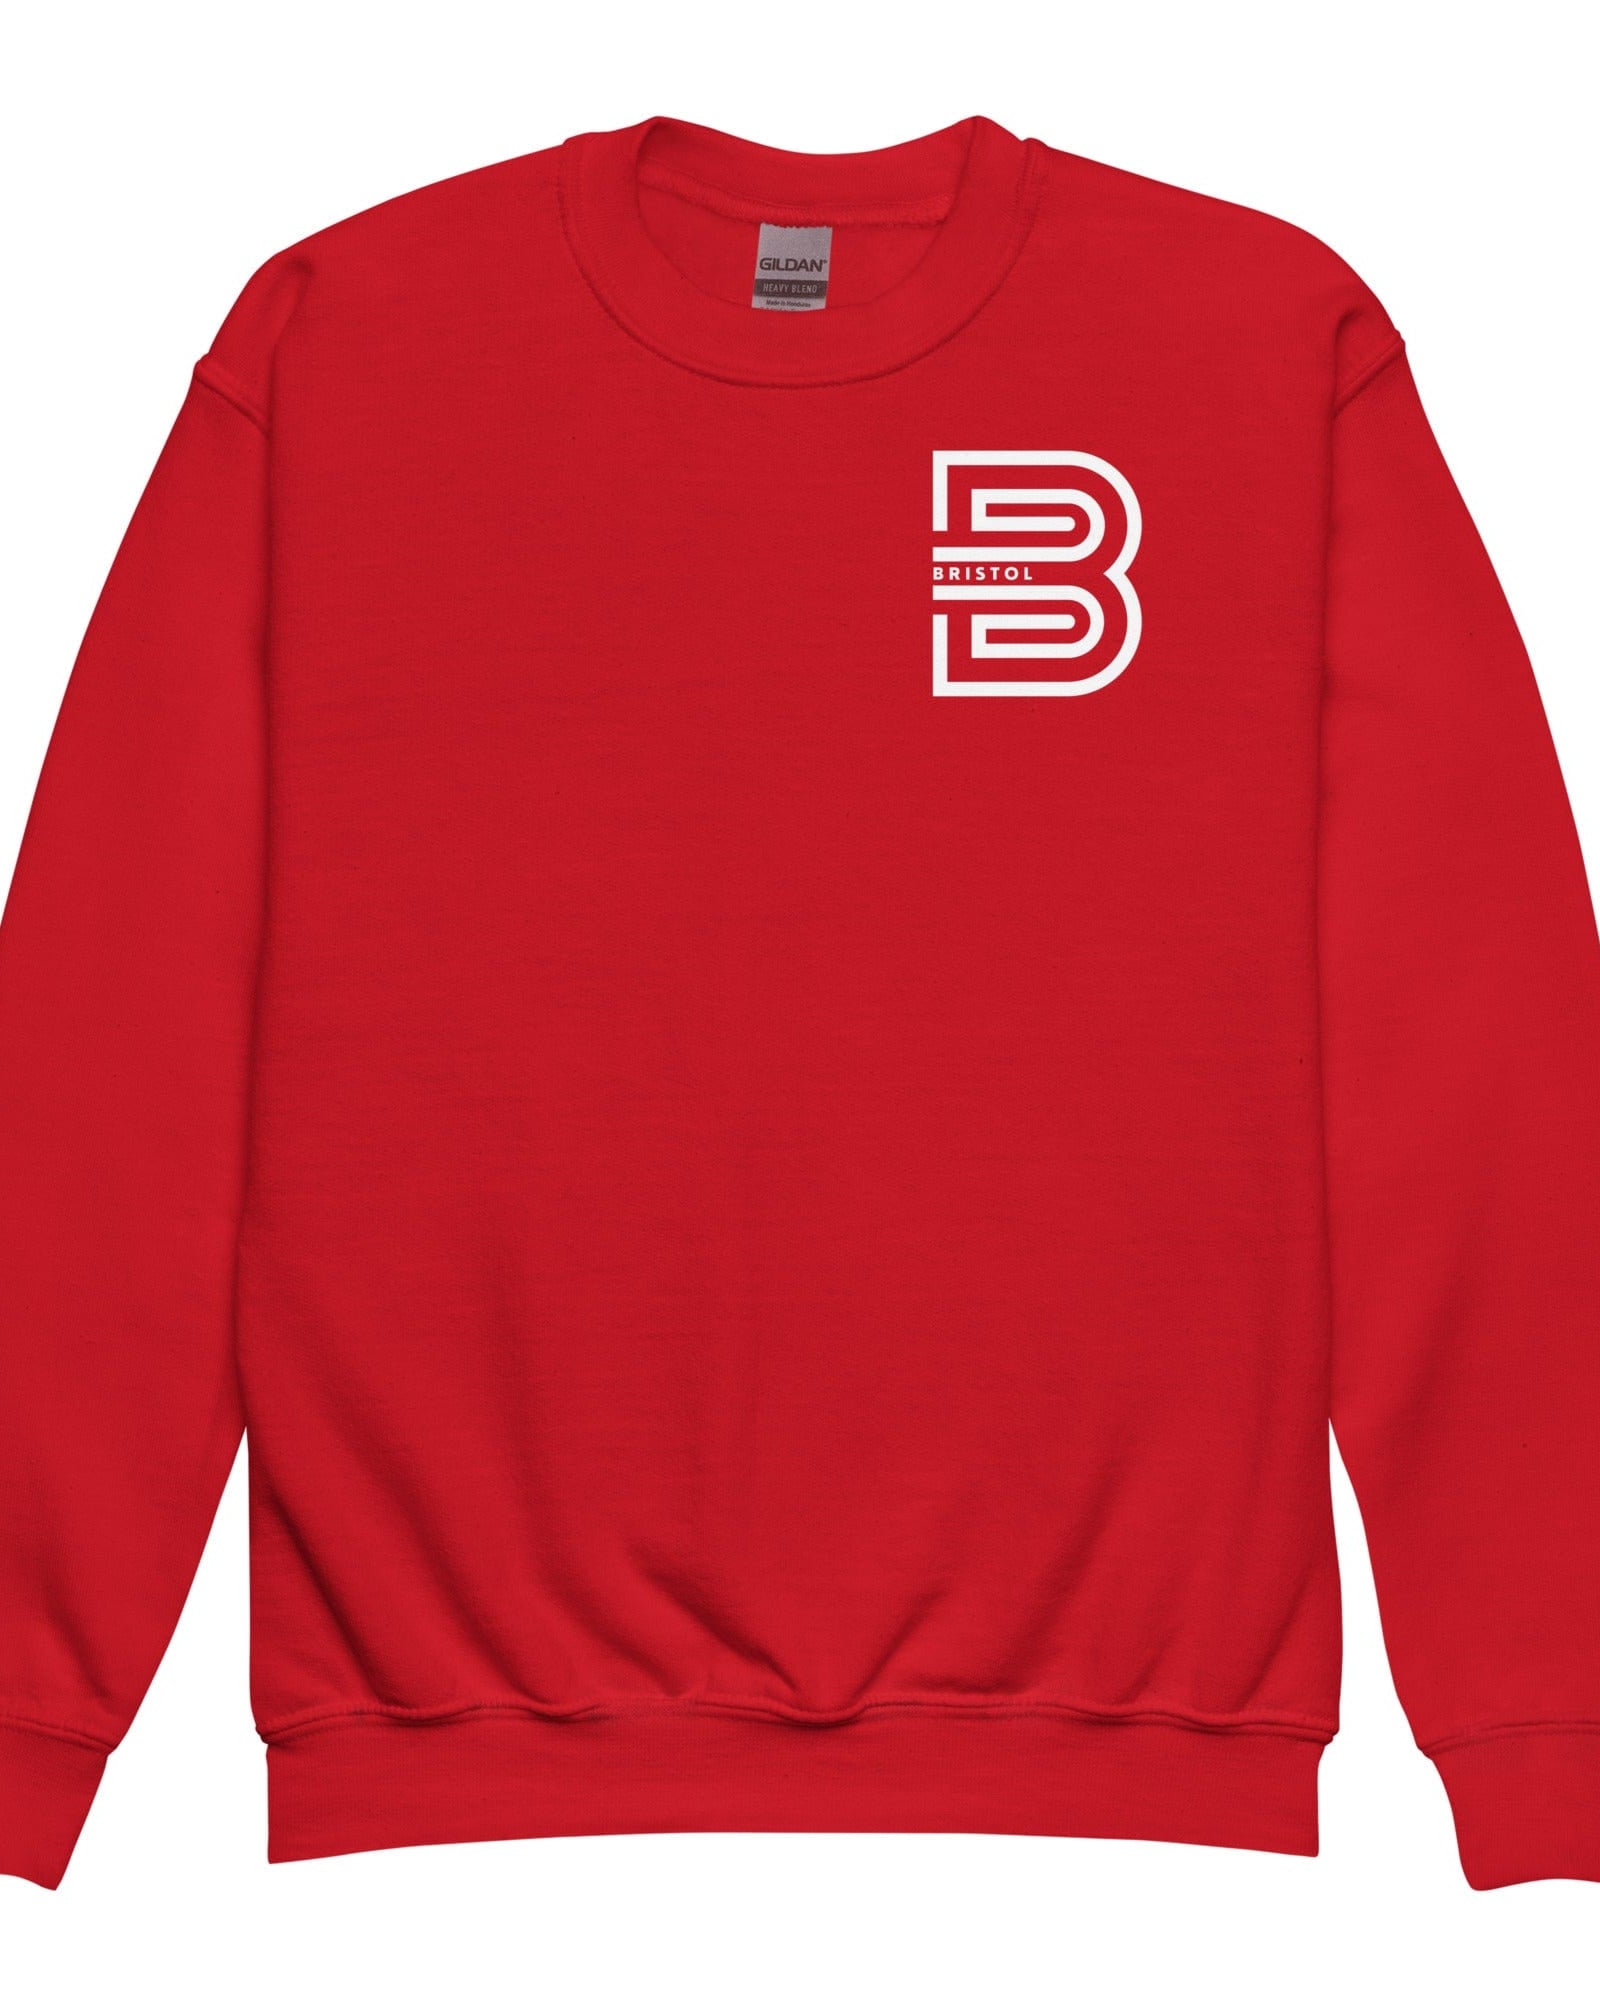 Bristol B Youth Crewneck Sweatshirt Red / XS youth sweatshirts Jolly & Goode